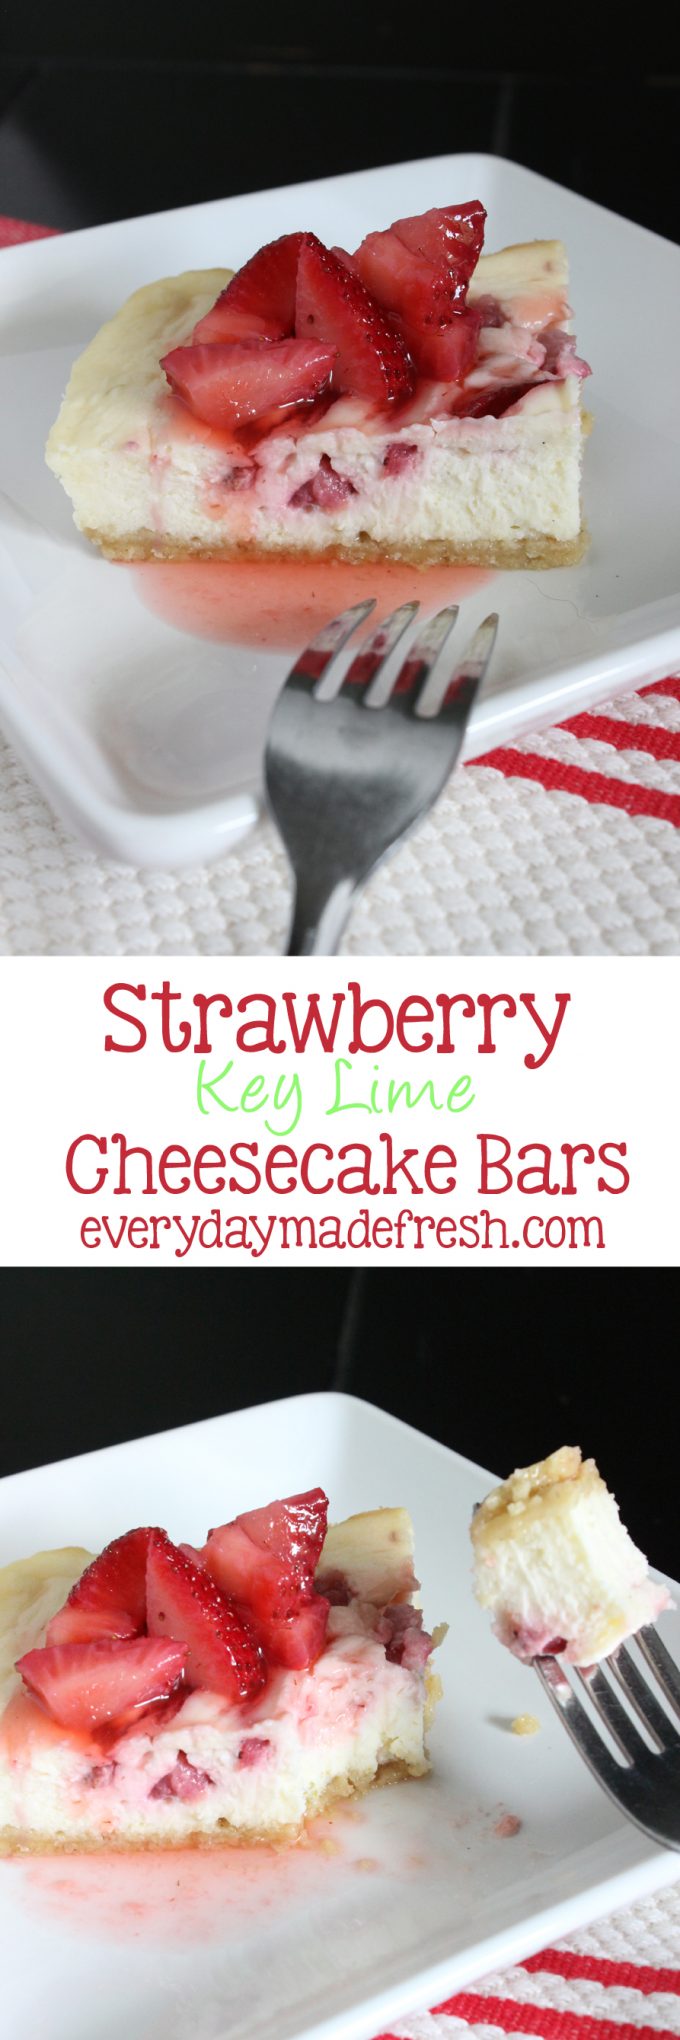 Strawberry Key Lime Cheesecake Bars - Everyday Made Fresh